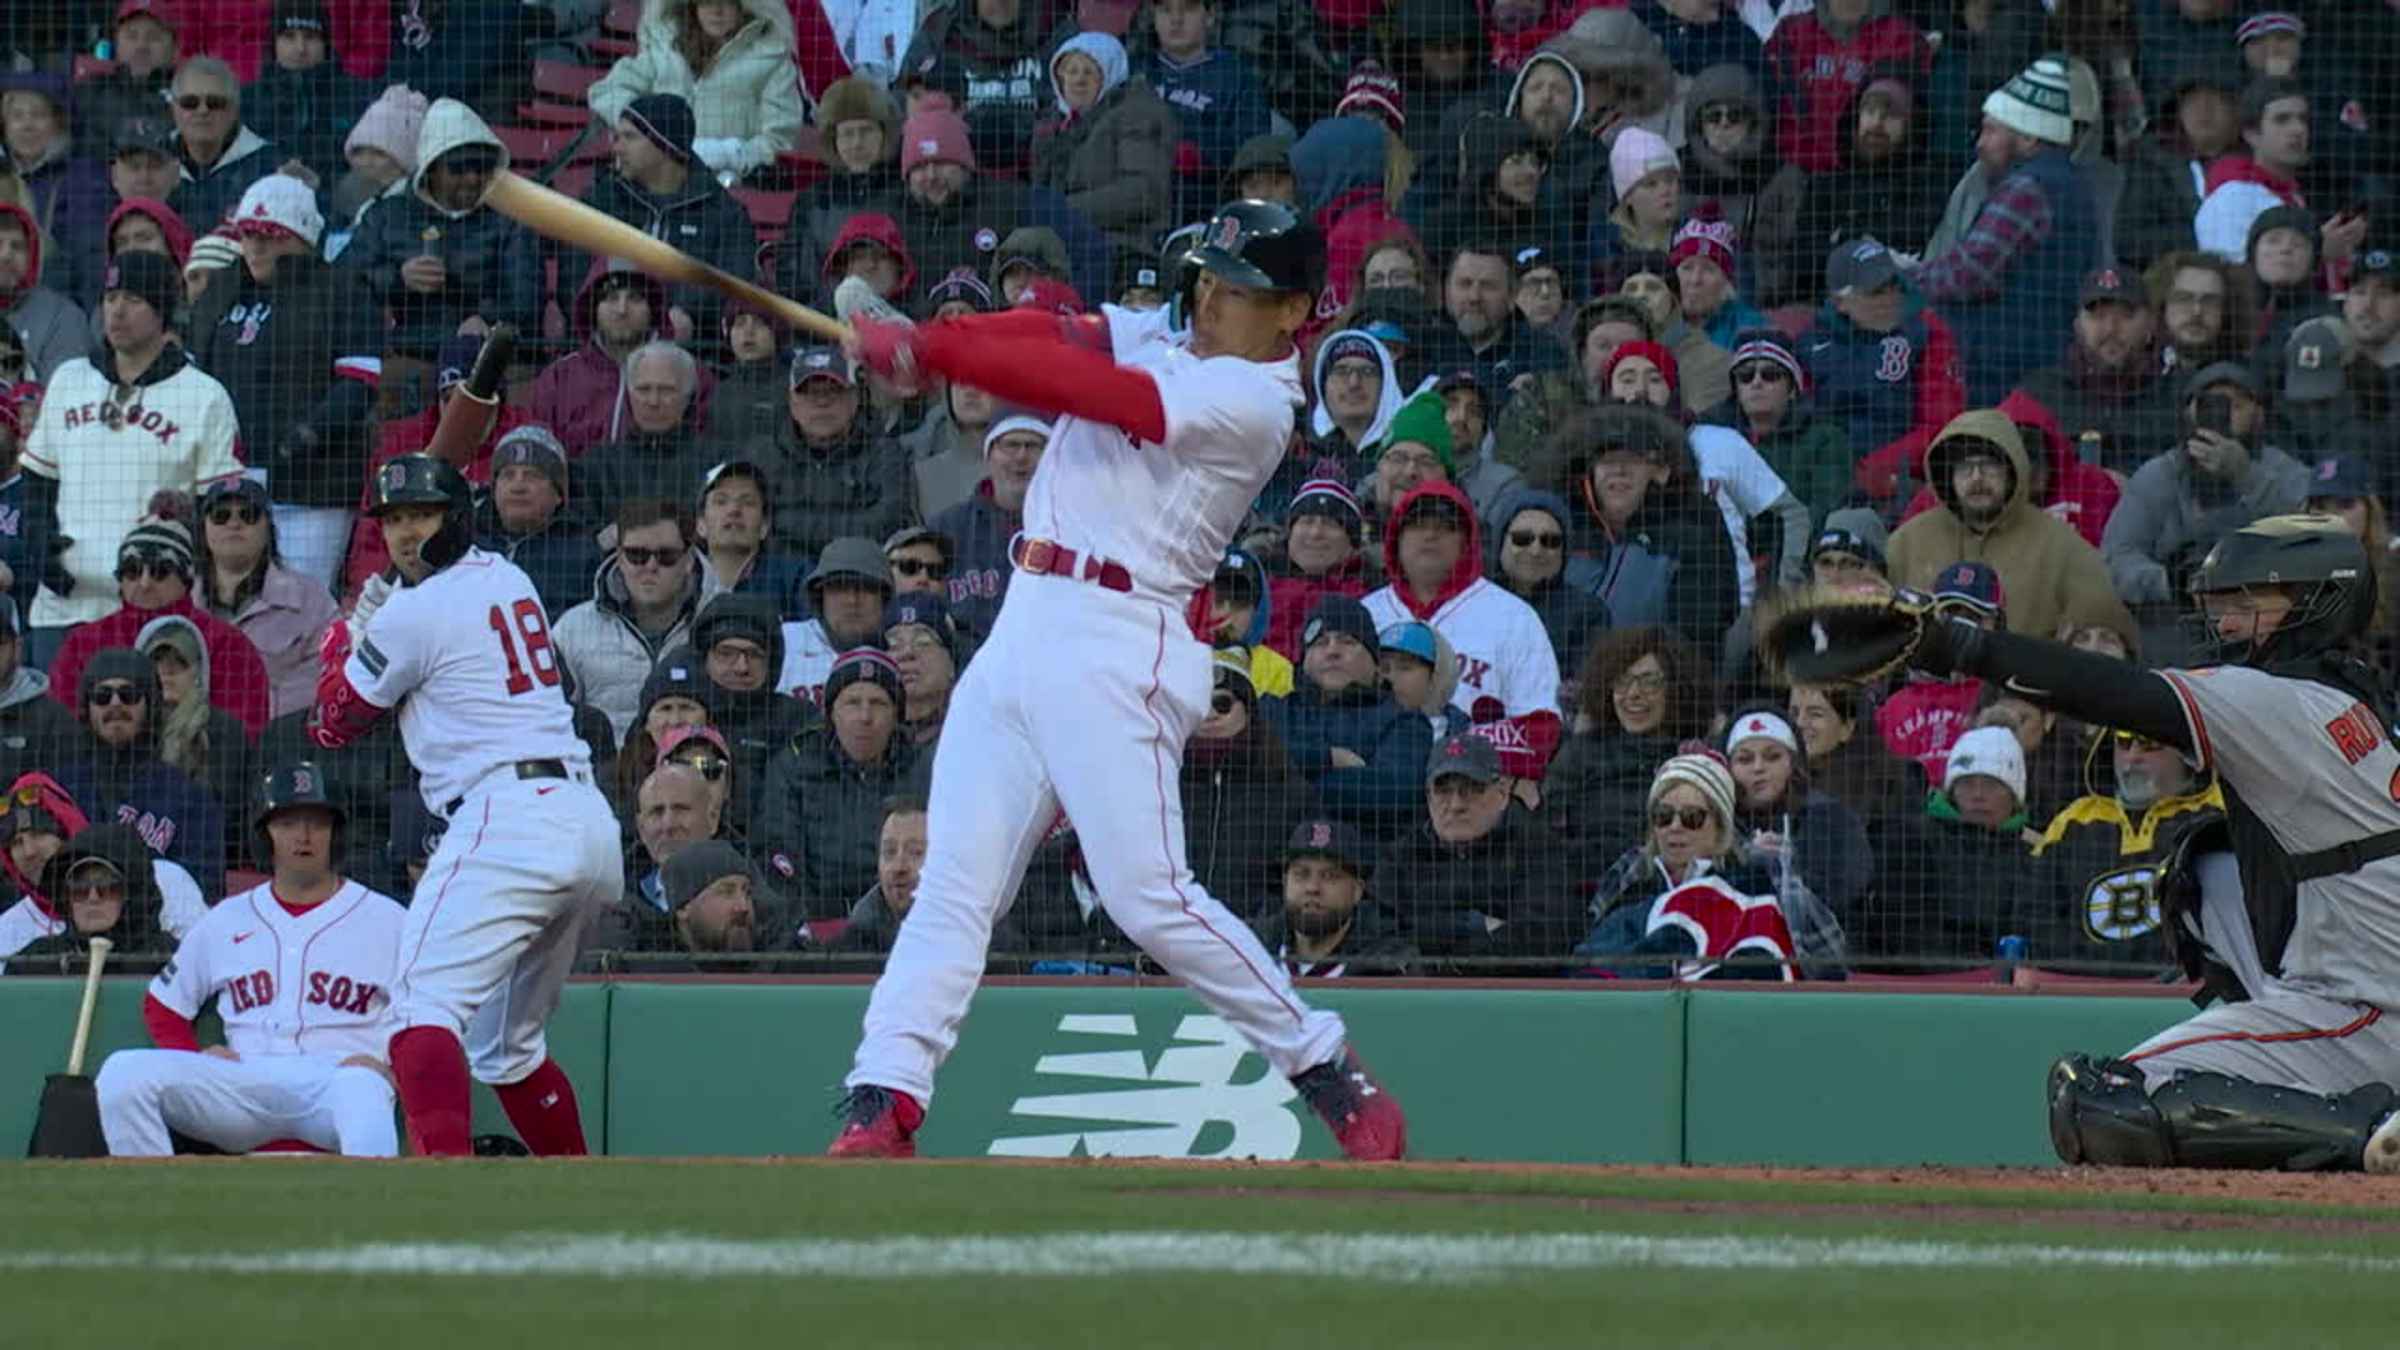 Watch: Masataka Yoshida hits a go-ahead RBI single for Red Sox